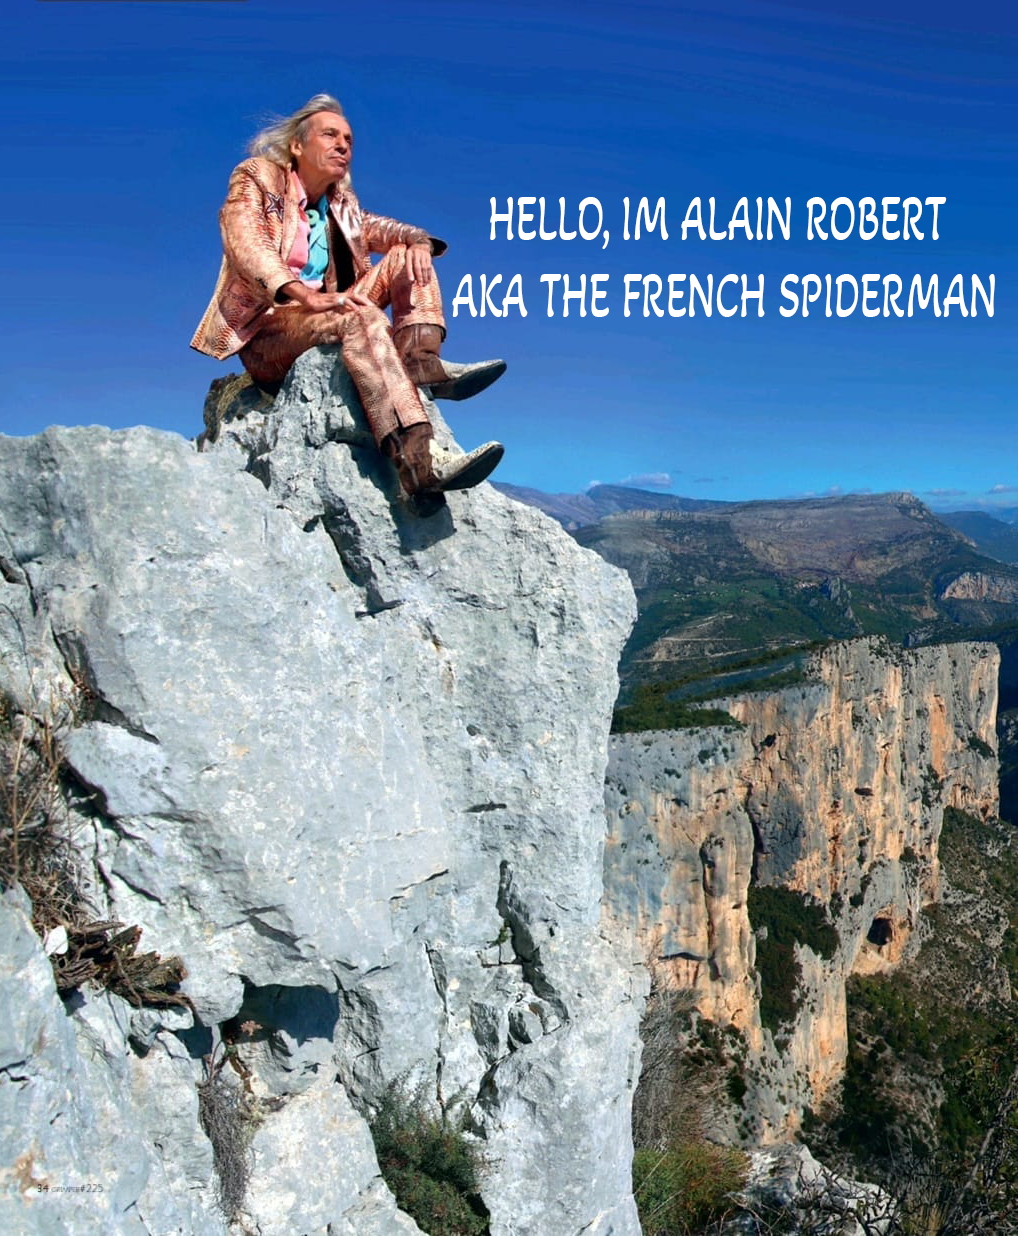 Alain Robert The French Spiderman climber